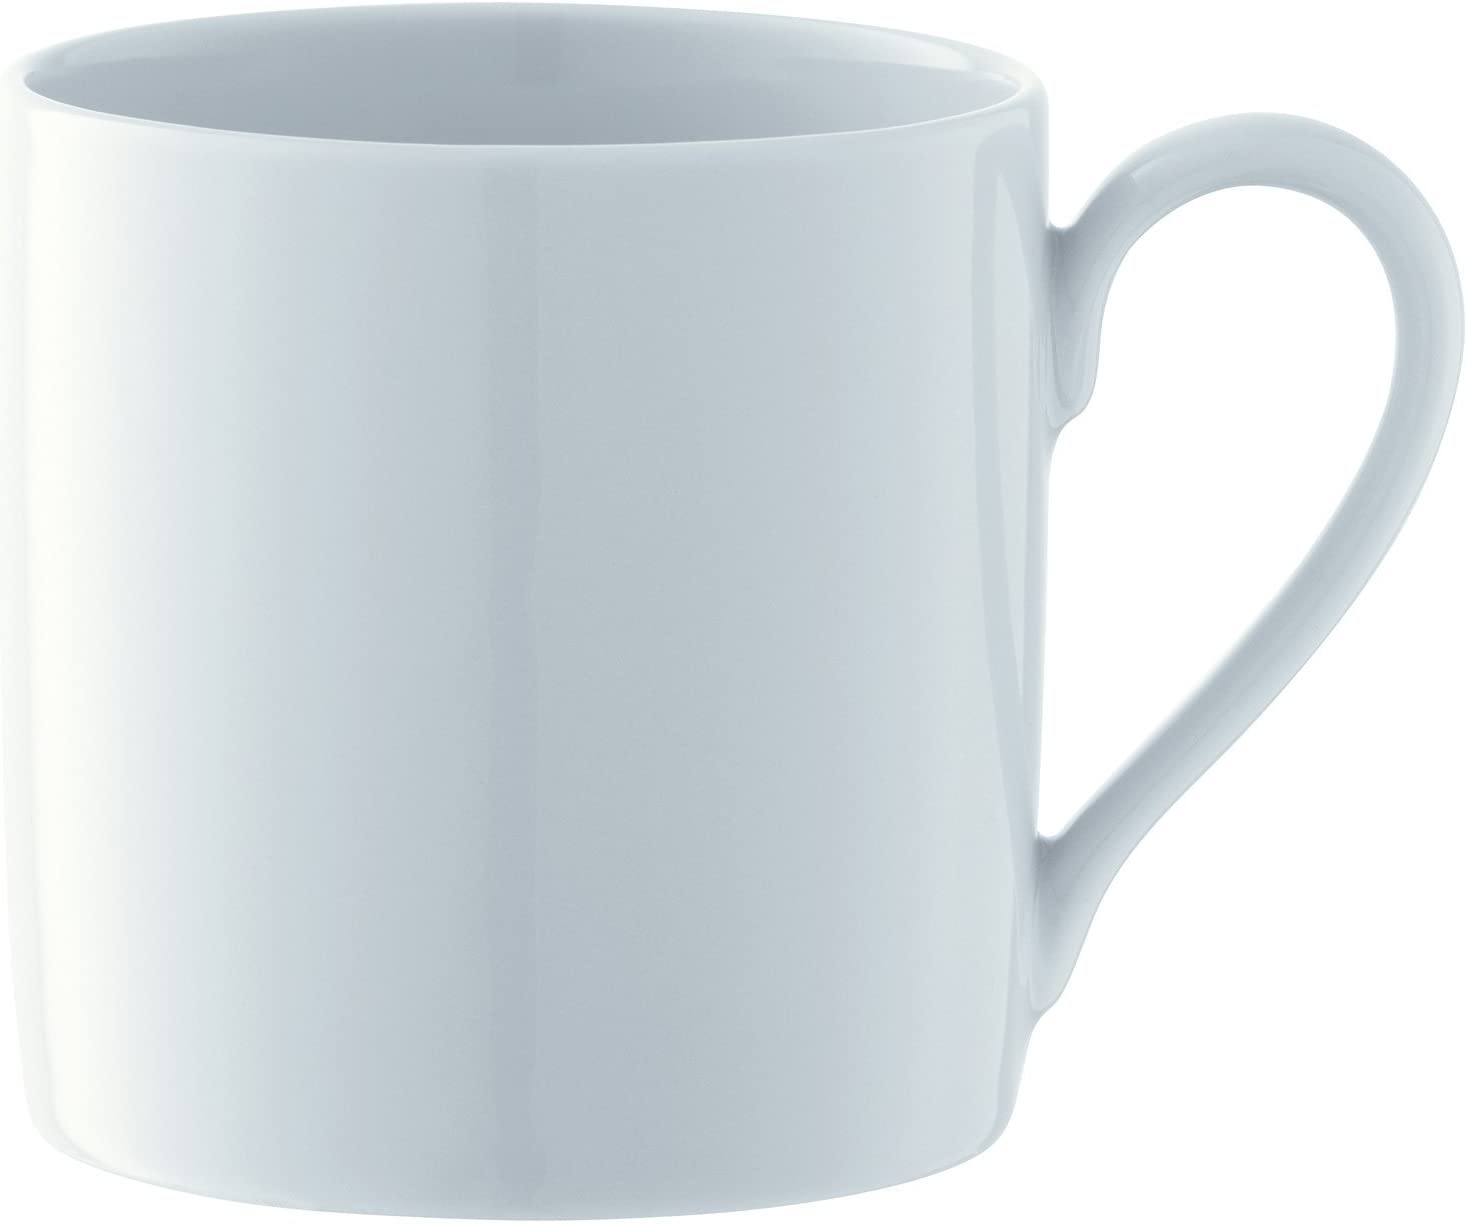 LSA Dine Mugs Wide 4 Cups